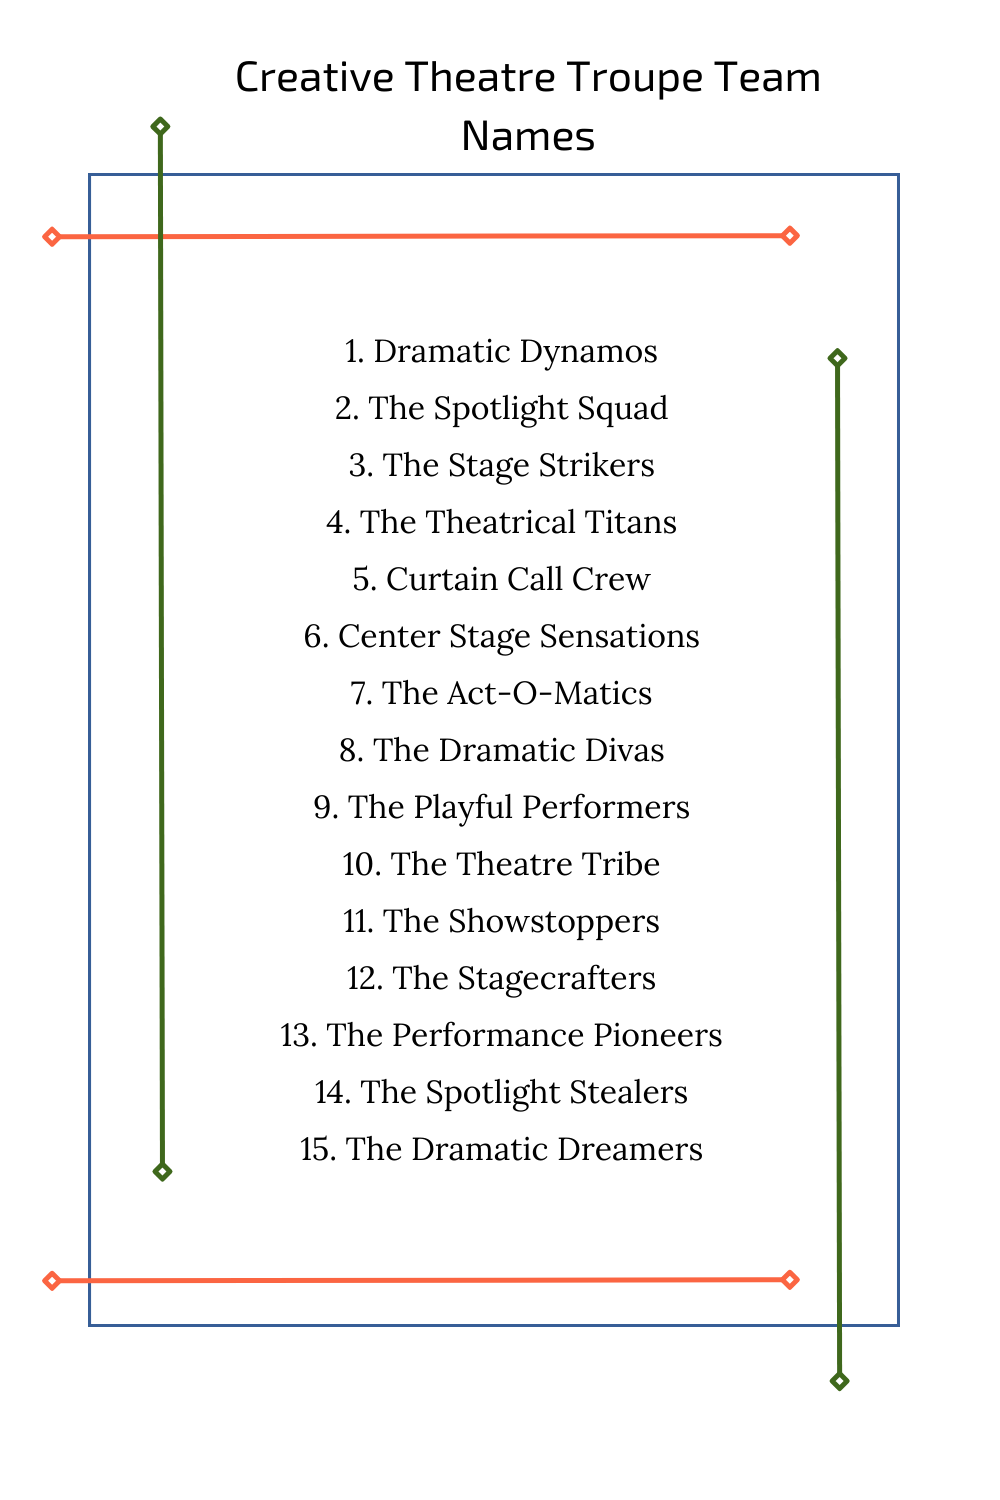 Creative Theatre Troupe Team Names